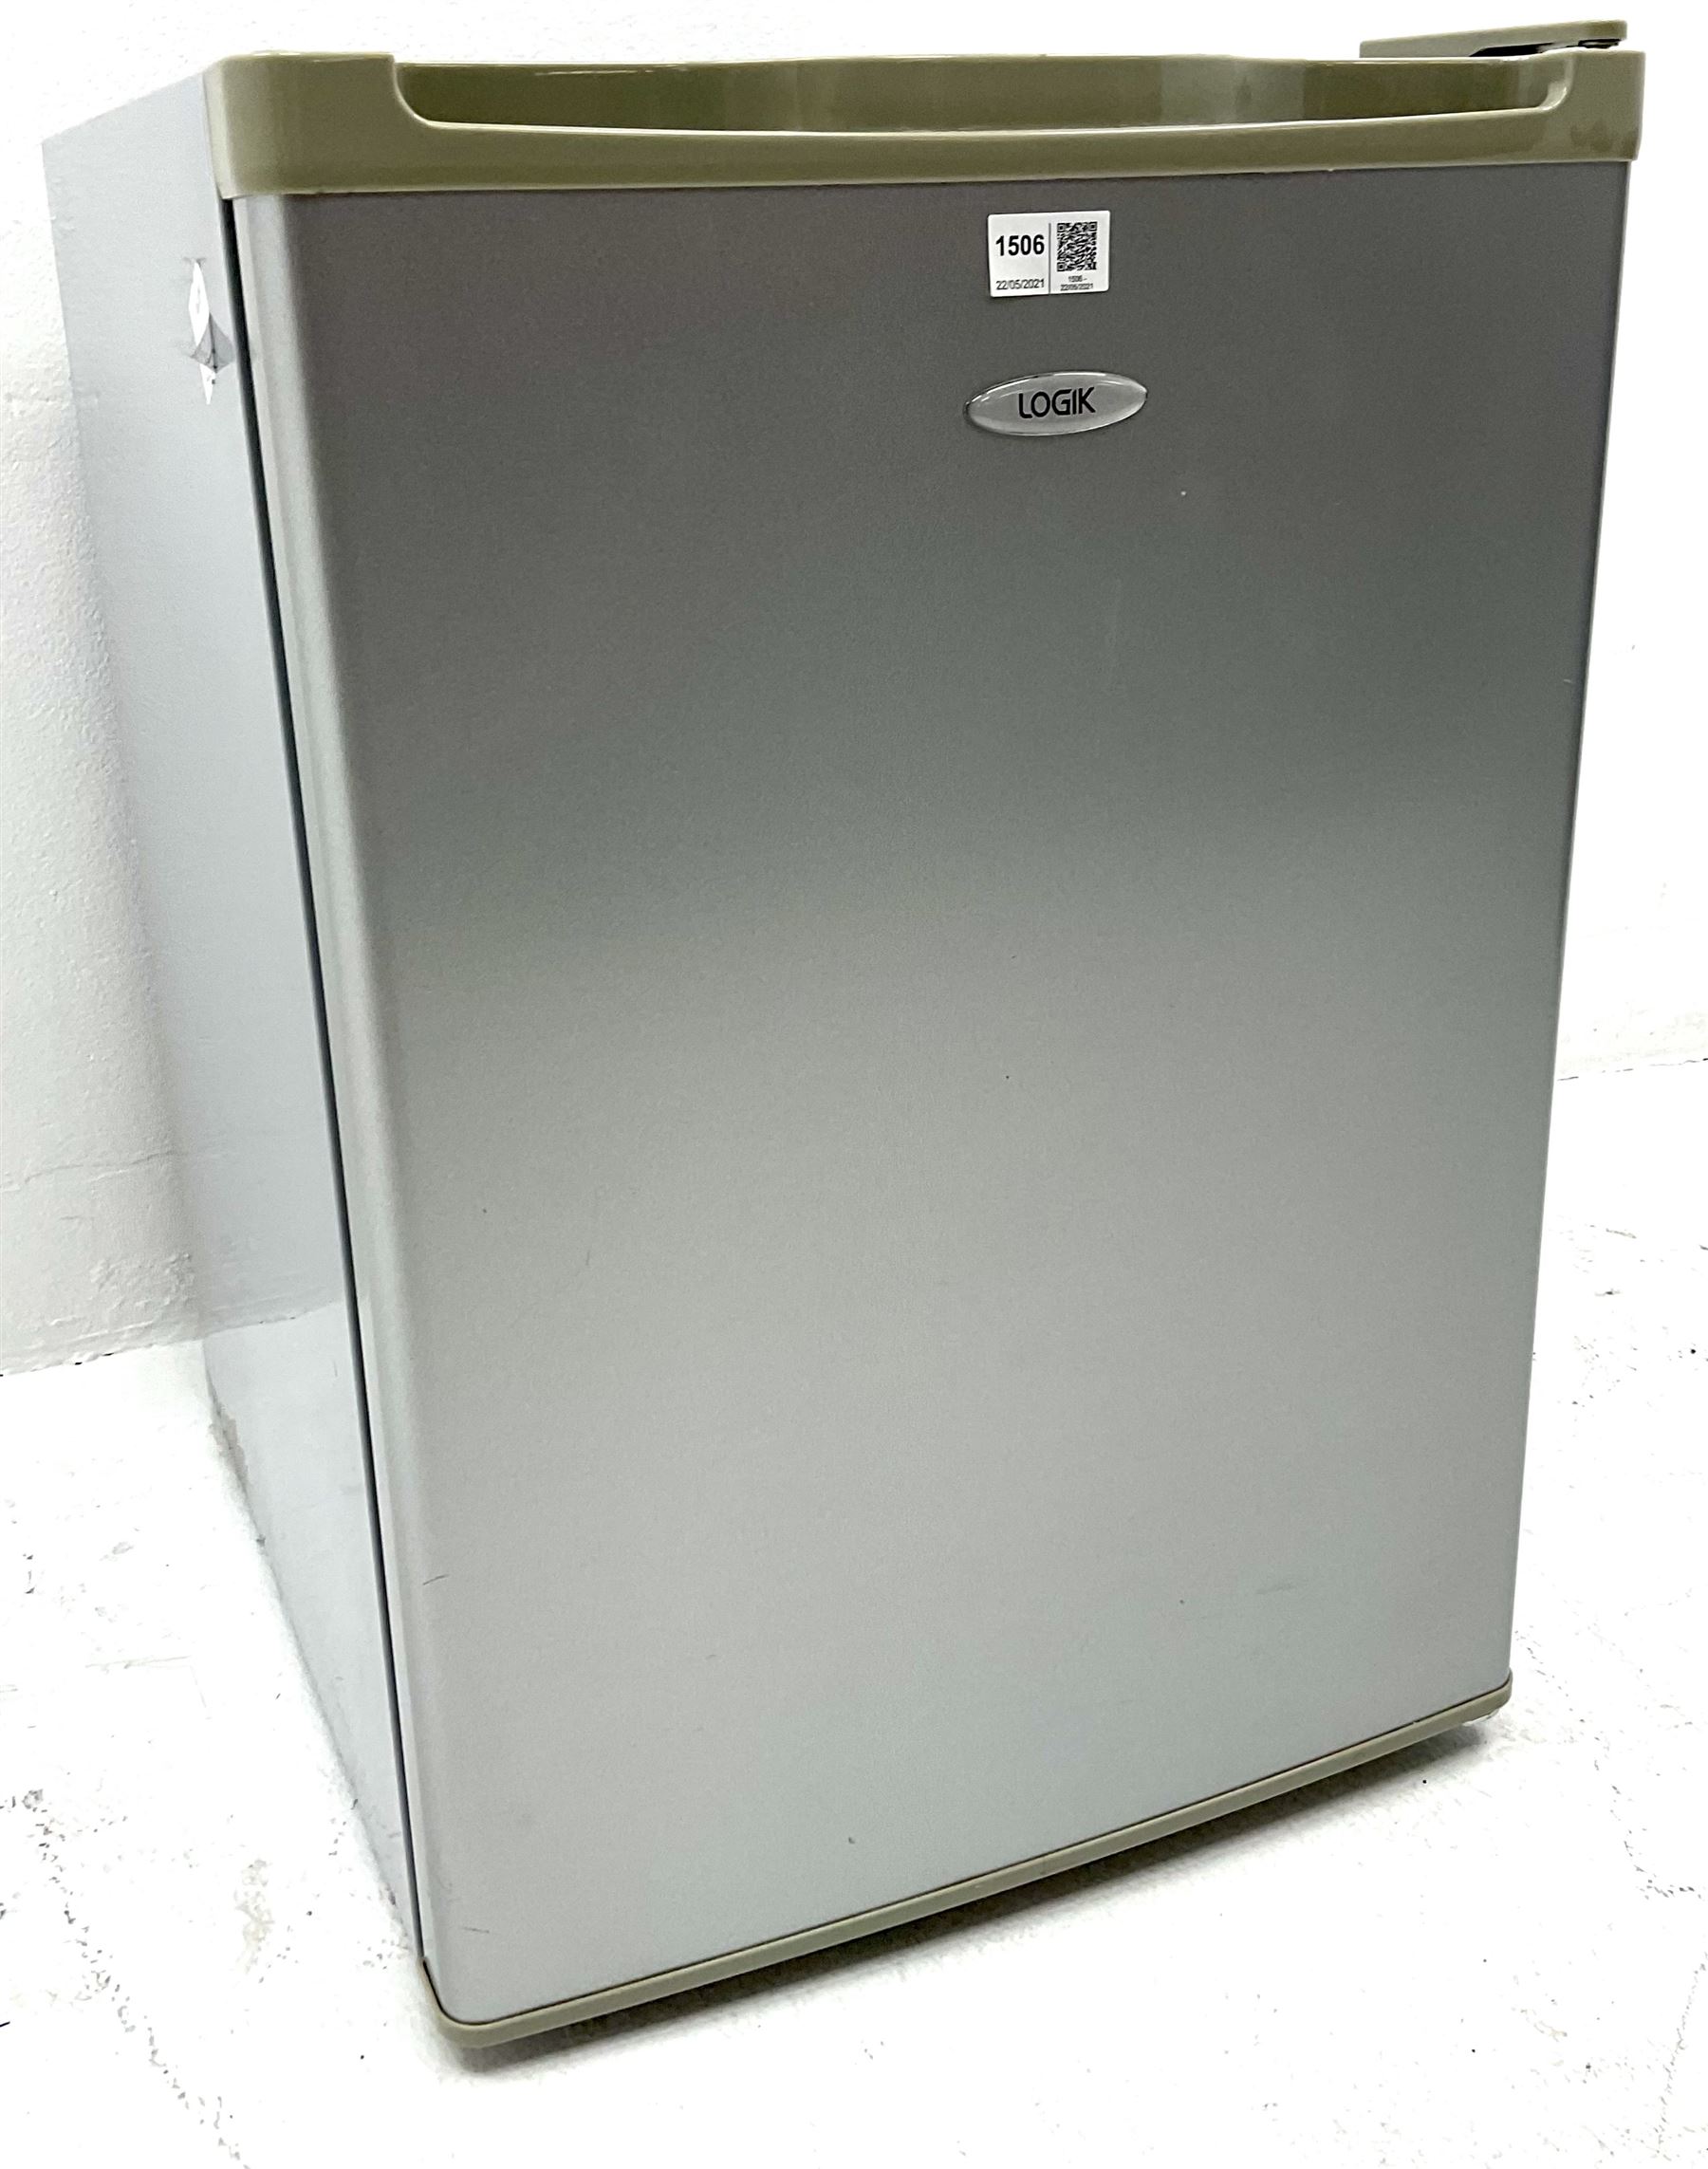 Logik LTT68S12 table top fridge